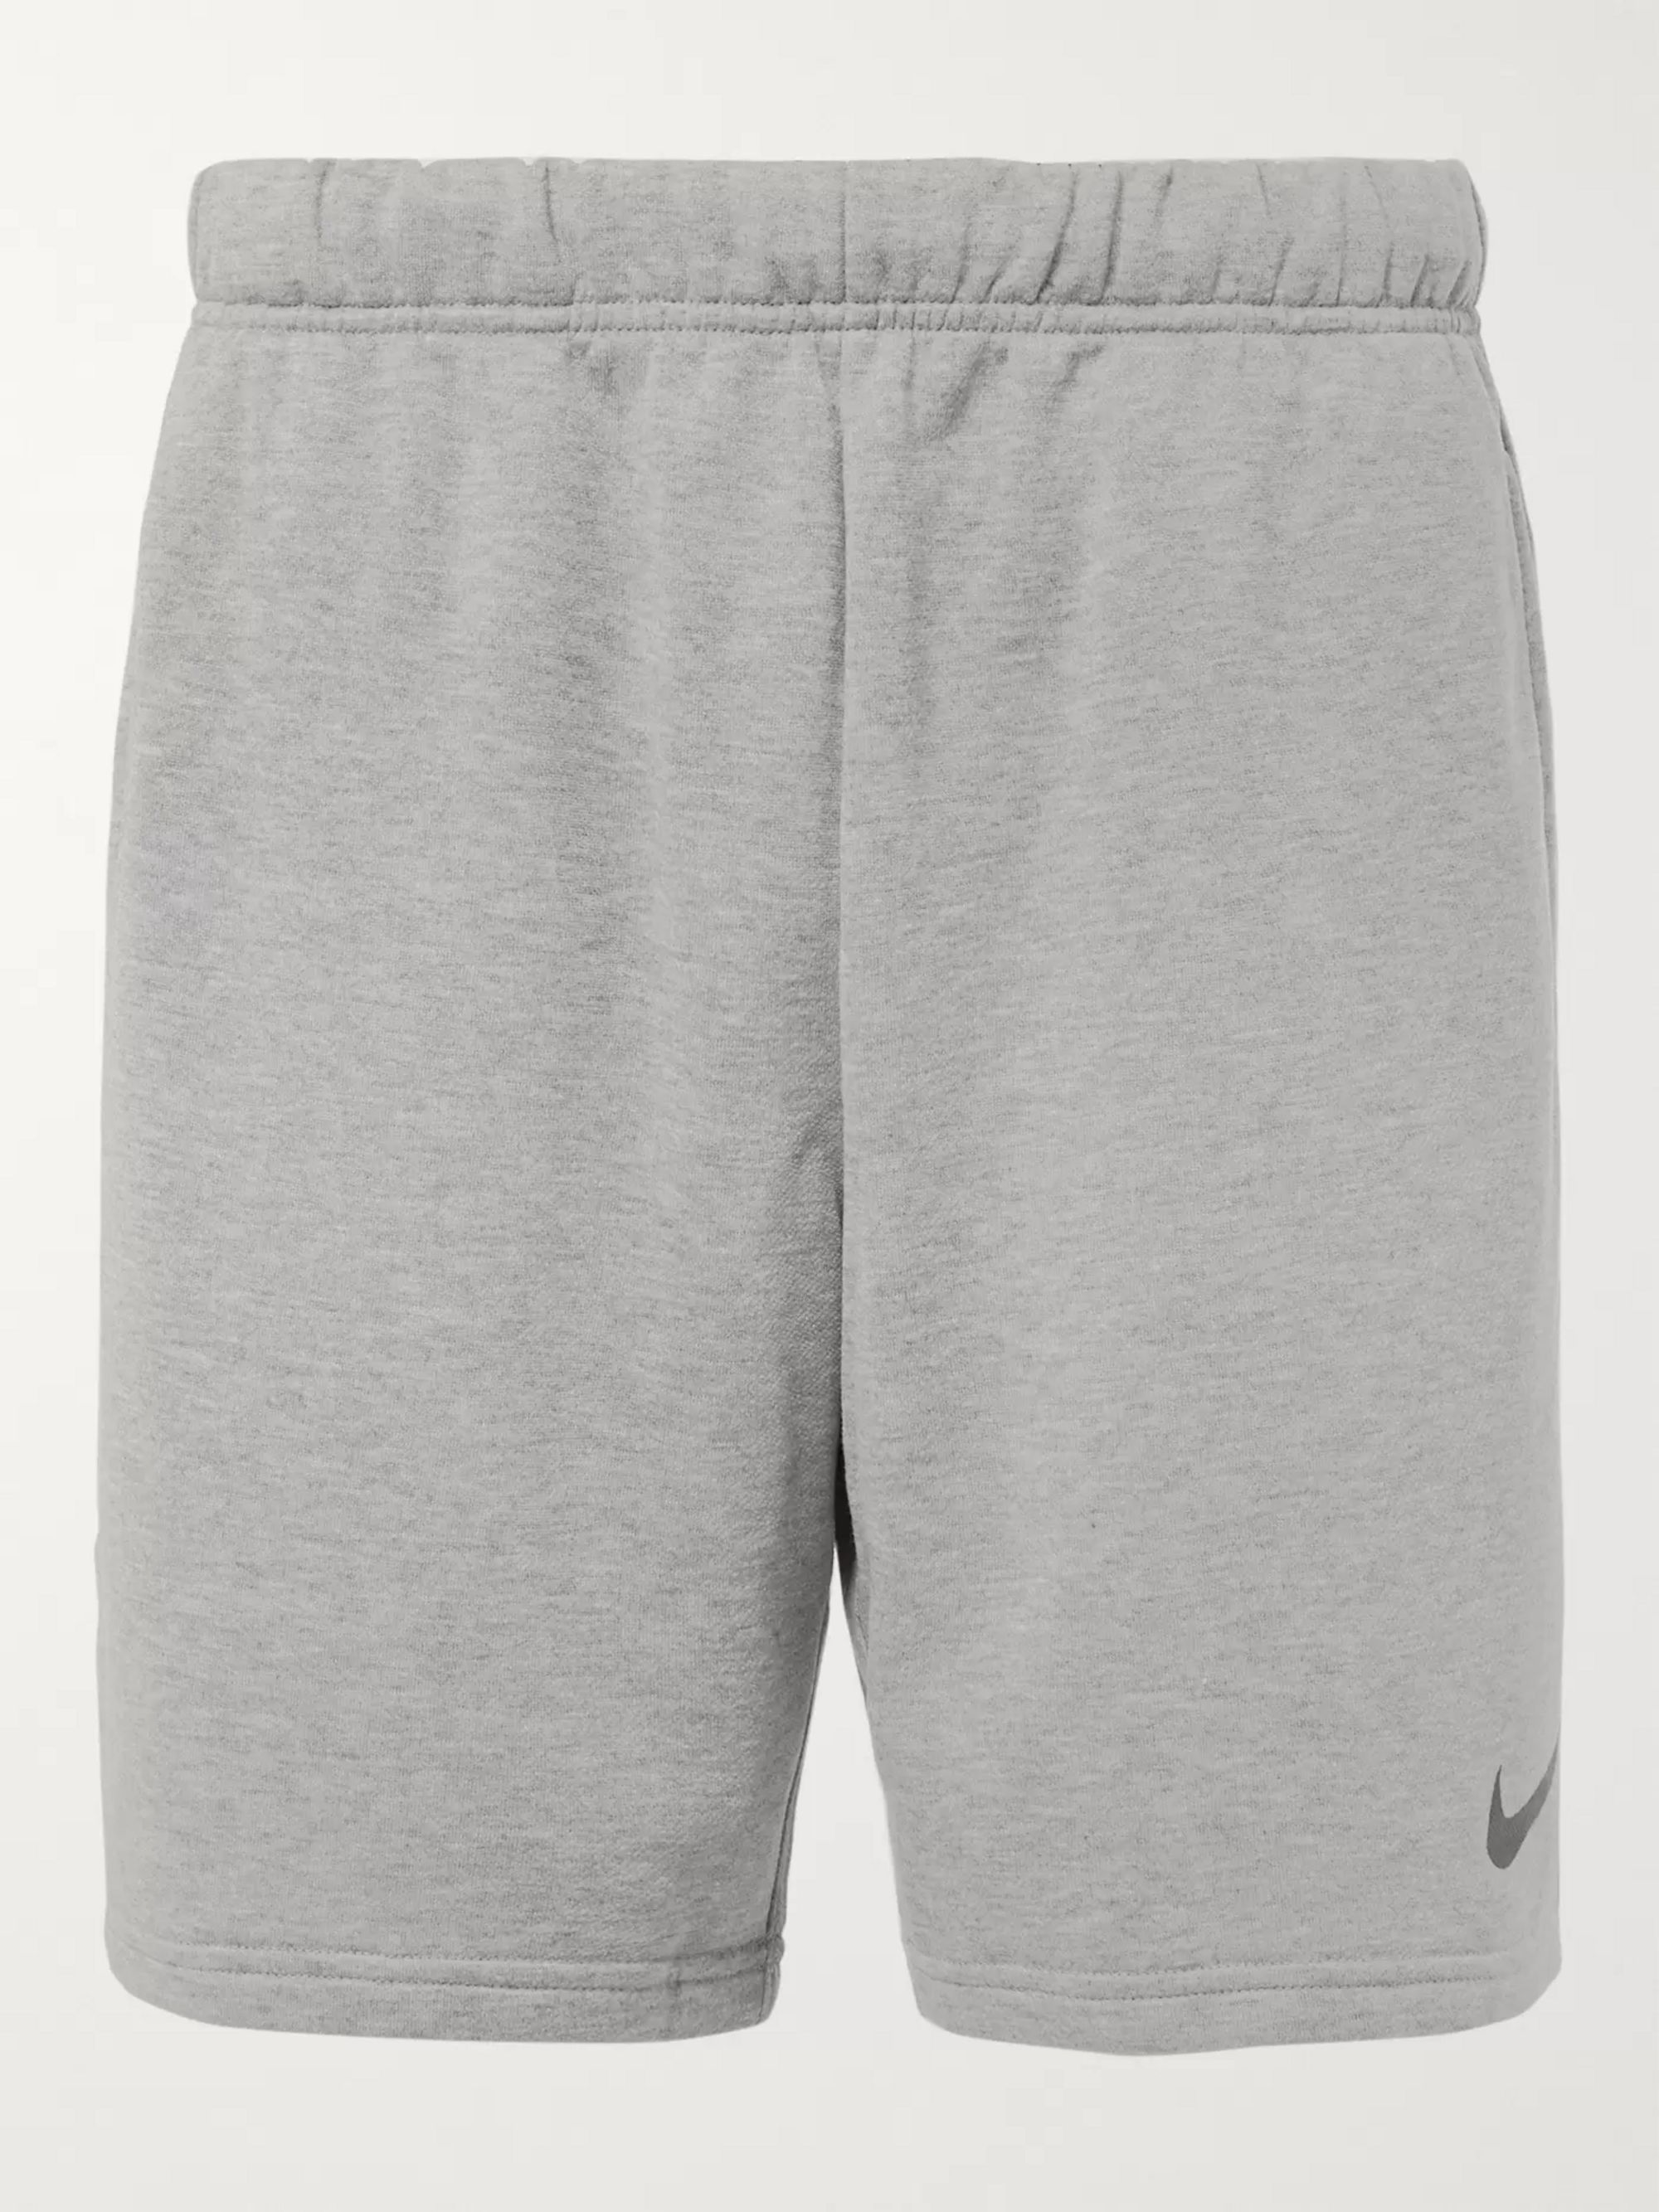 grey fleece nike shorts